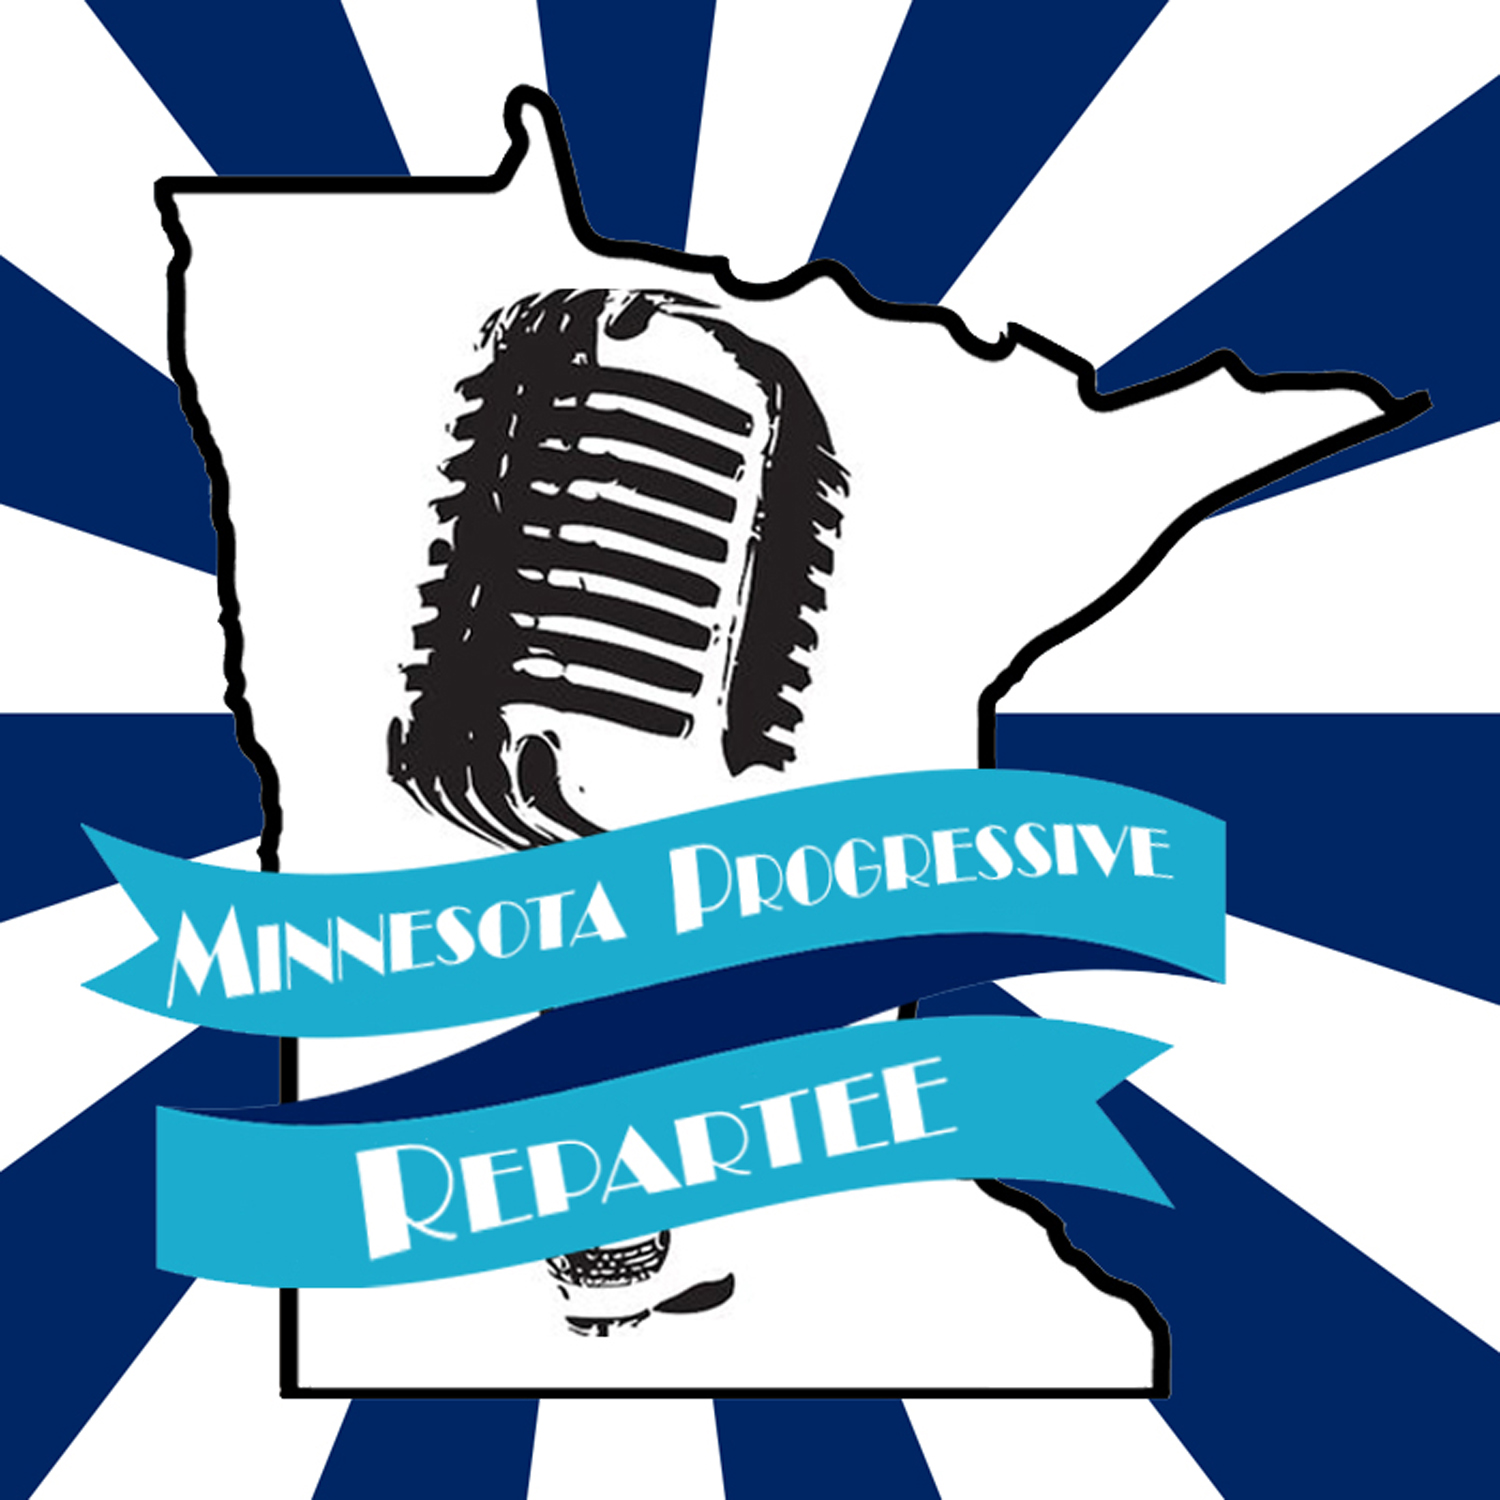 Minnesota Progressive Repartee - AM950 The Progressive Voice of Minnesota